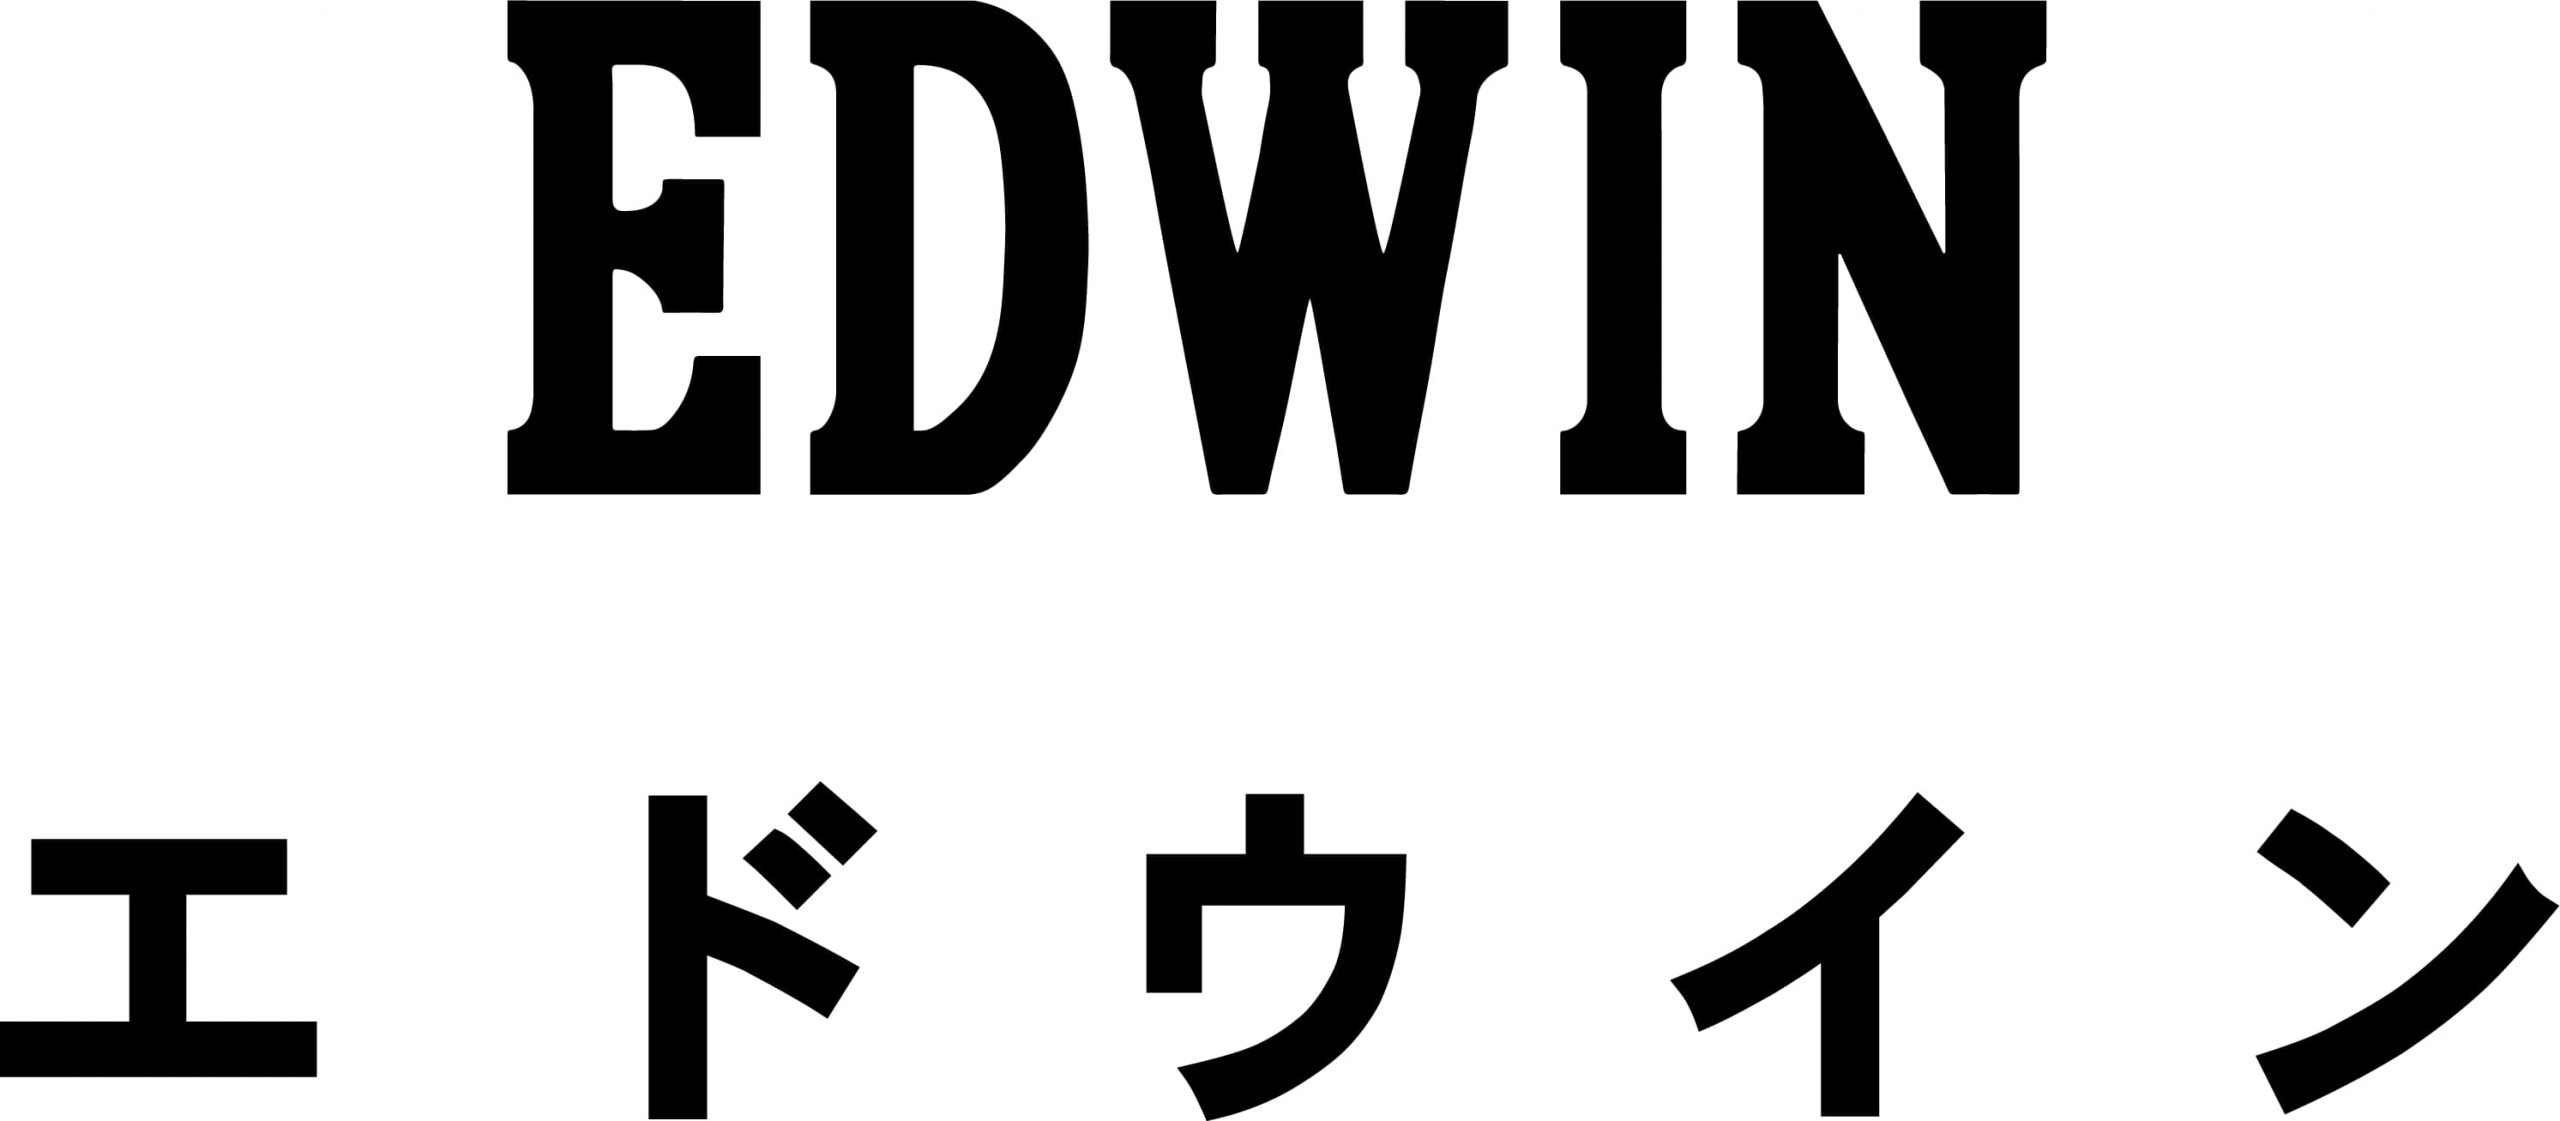 edwin logo